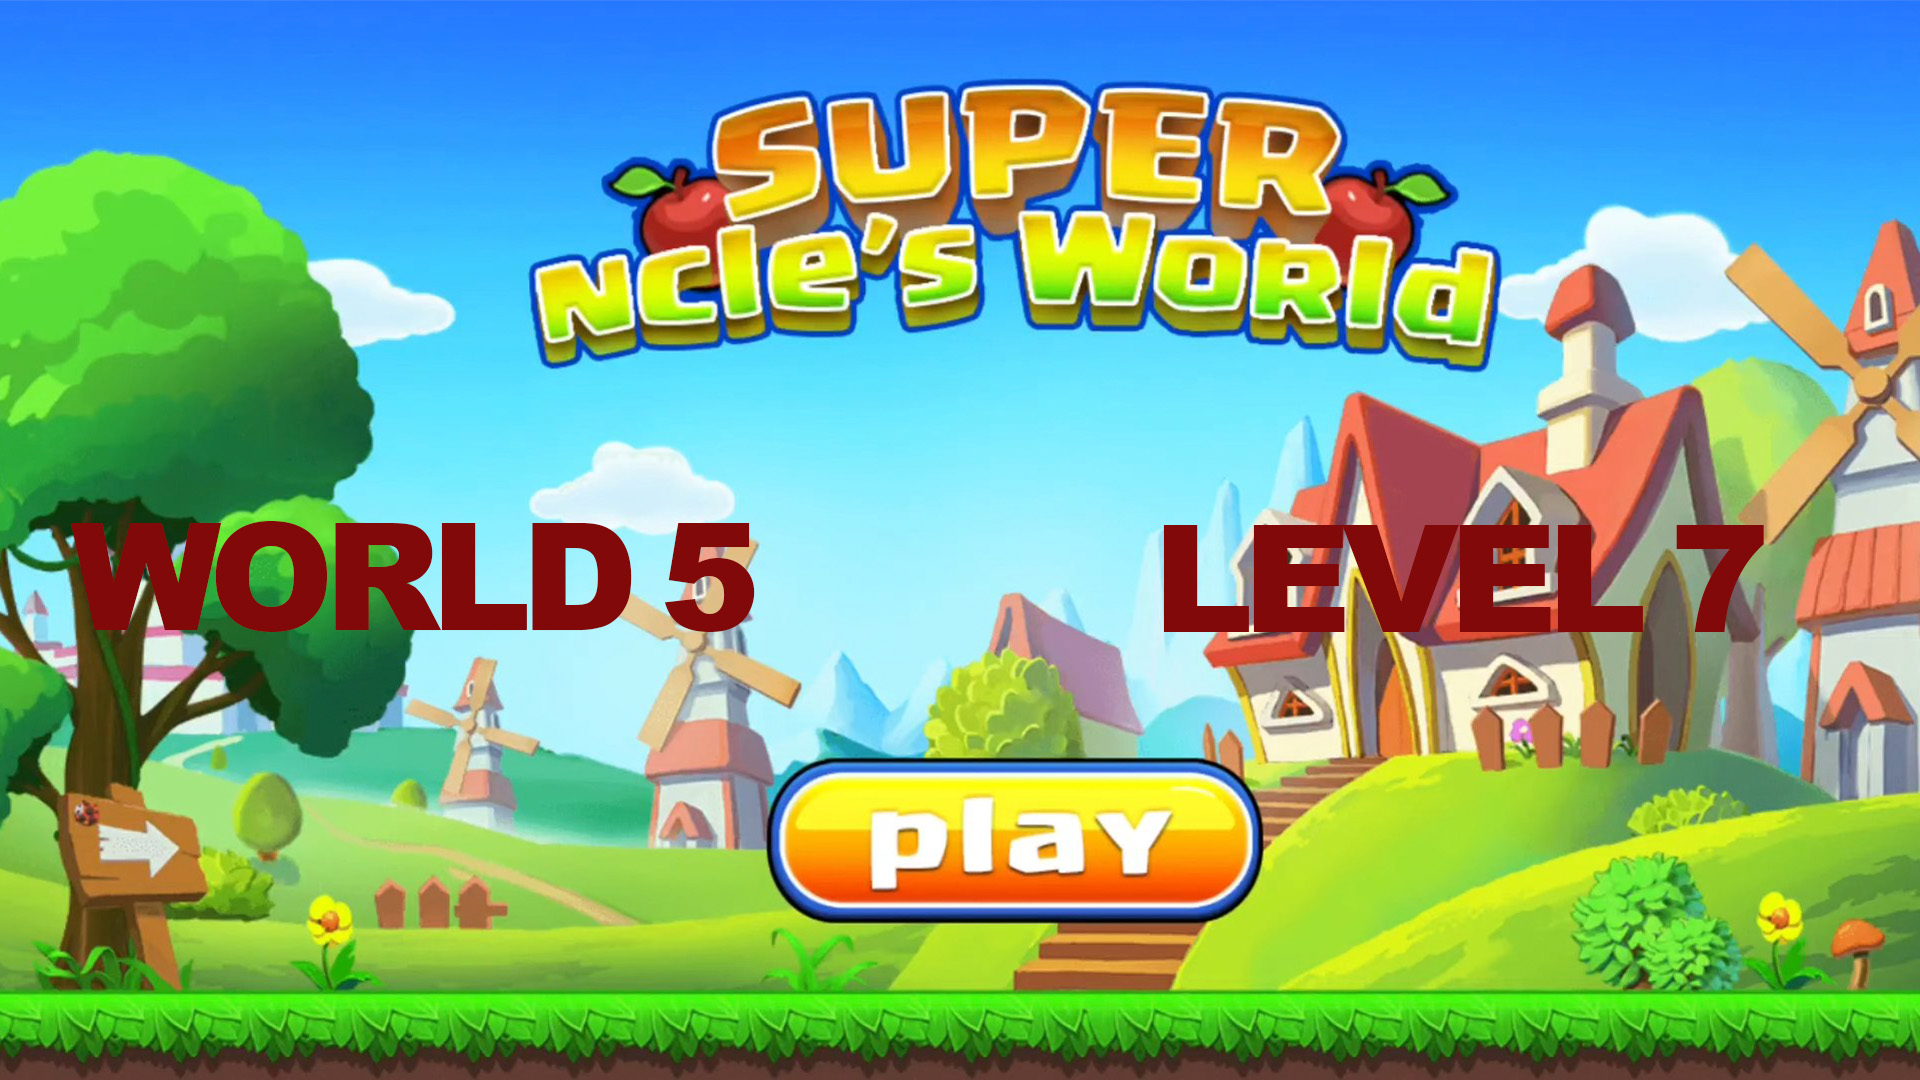 Super ncle's  World 5. Level 7.